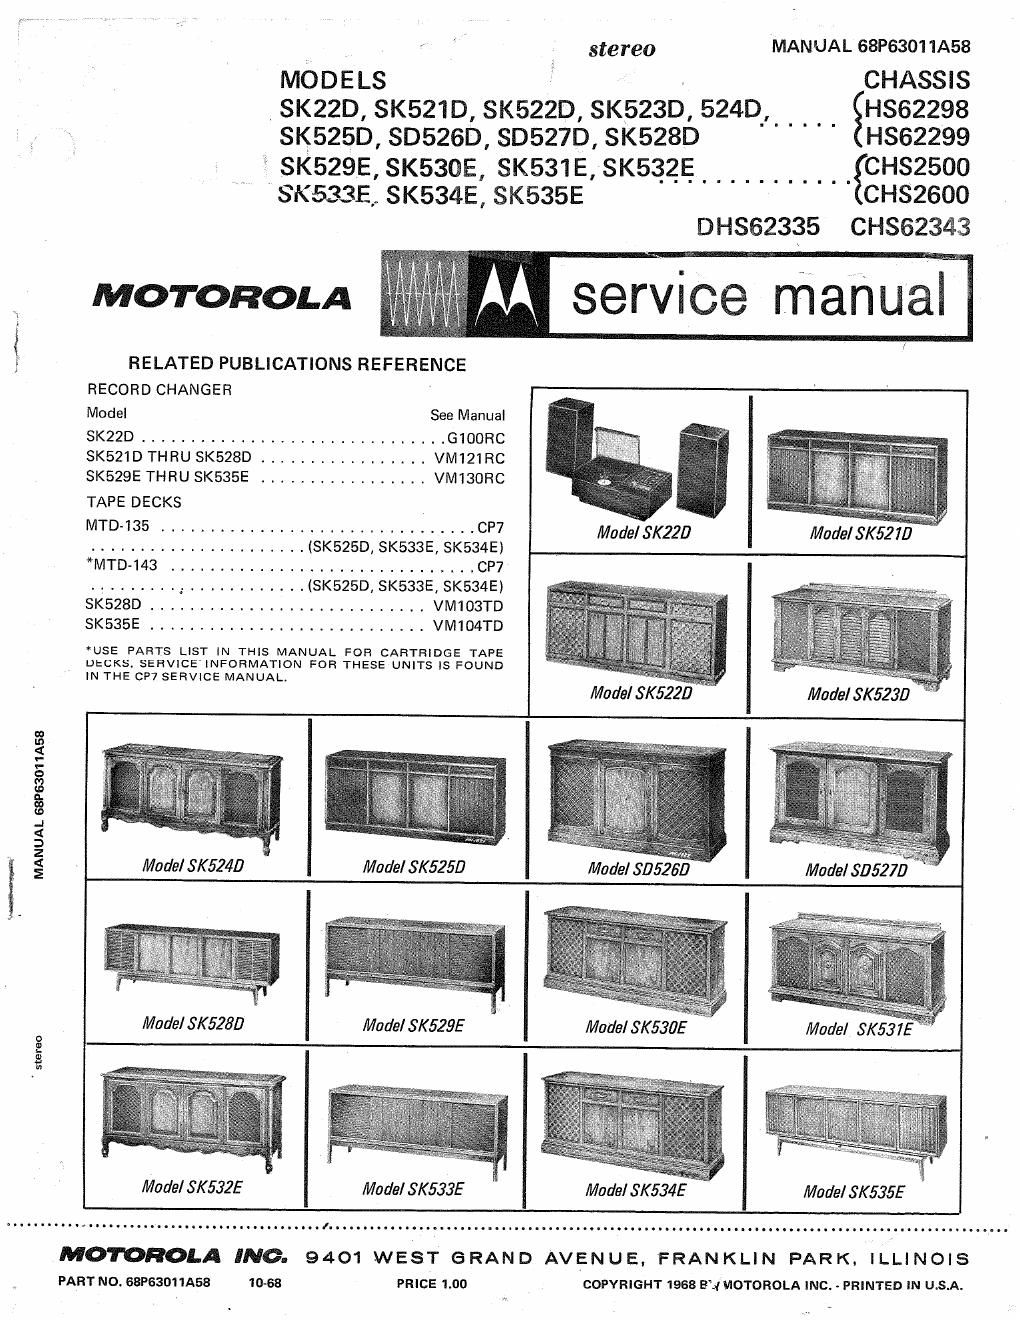 motorola sk 22 d service manual